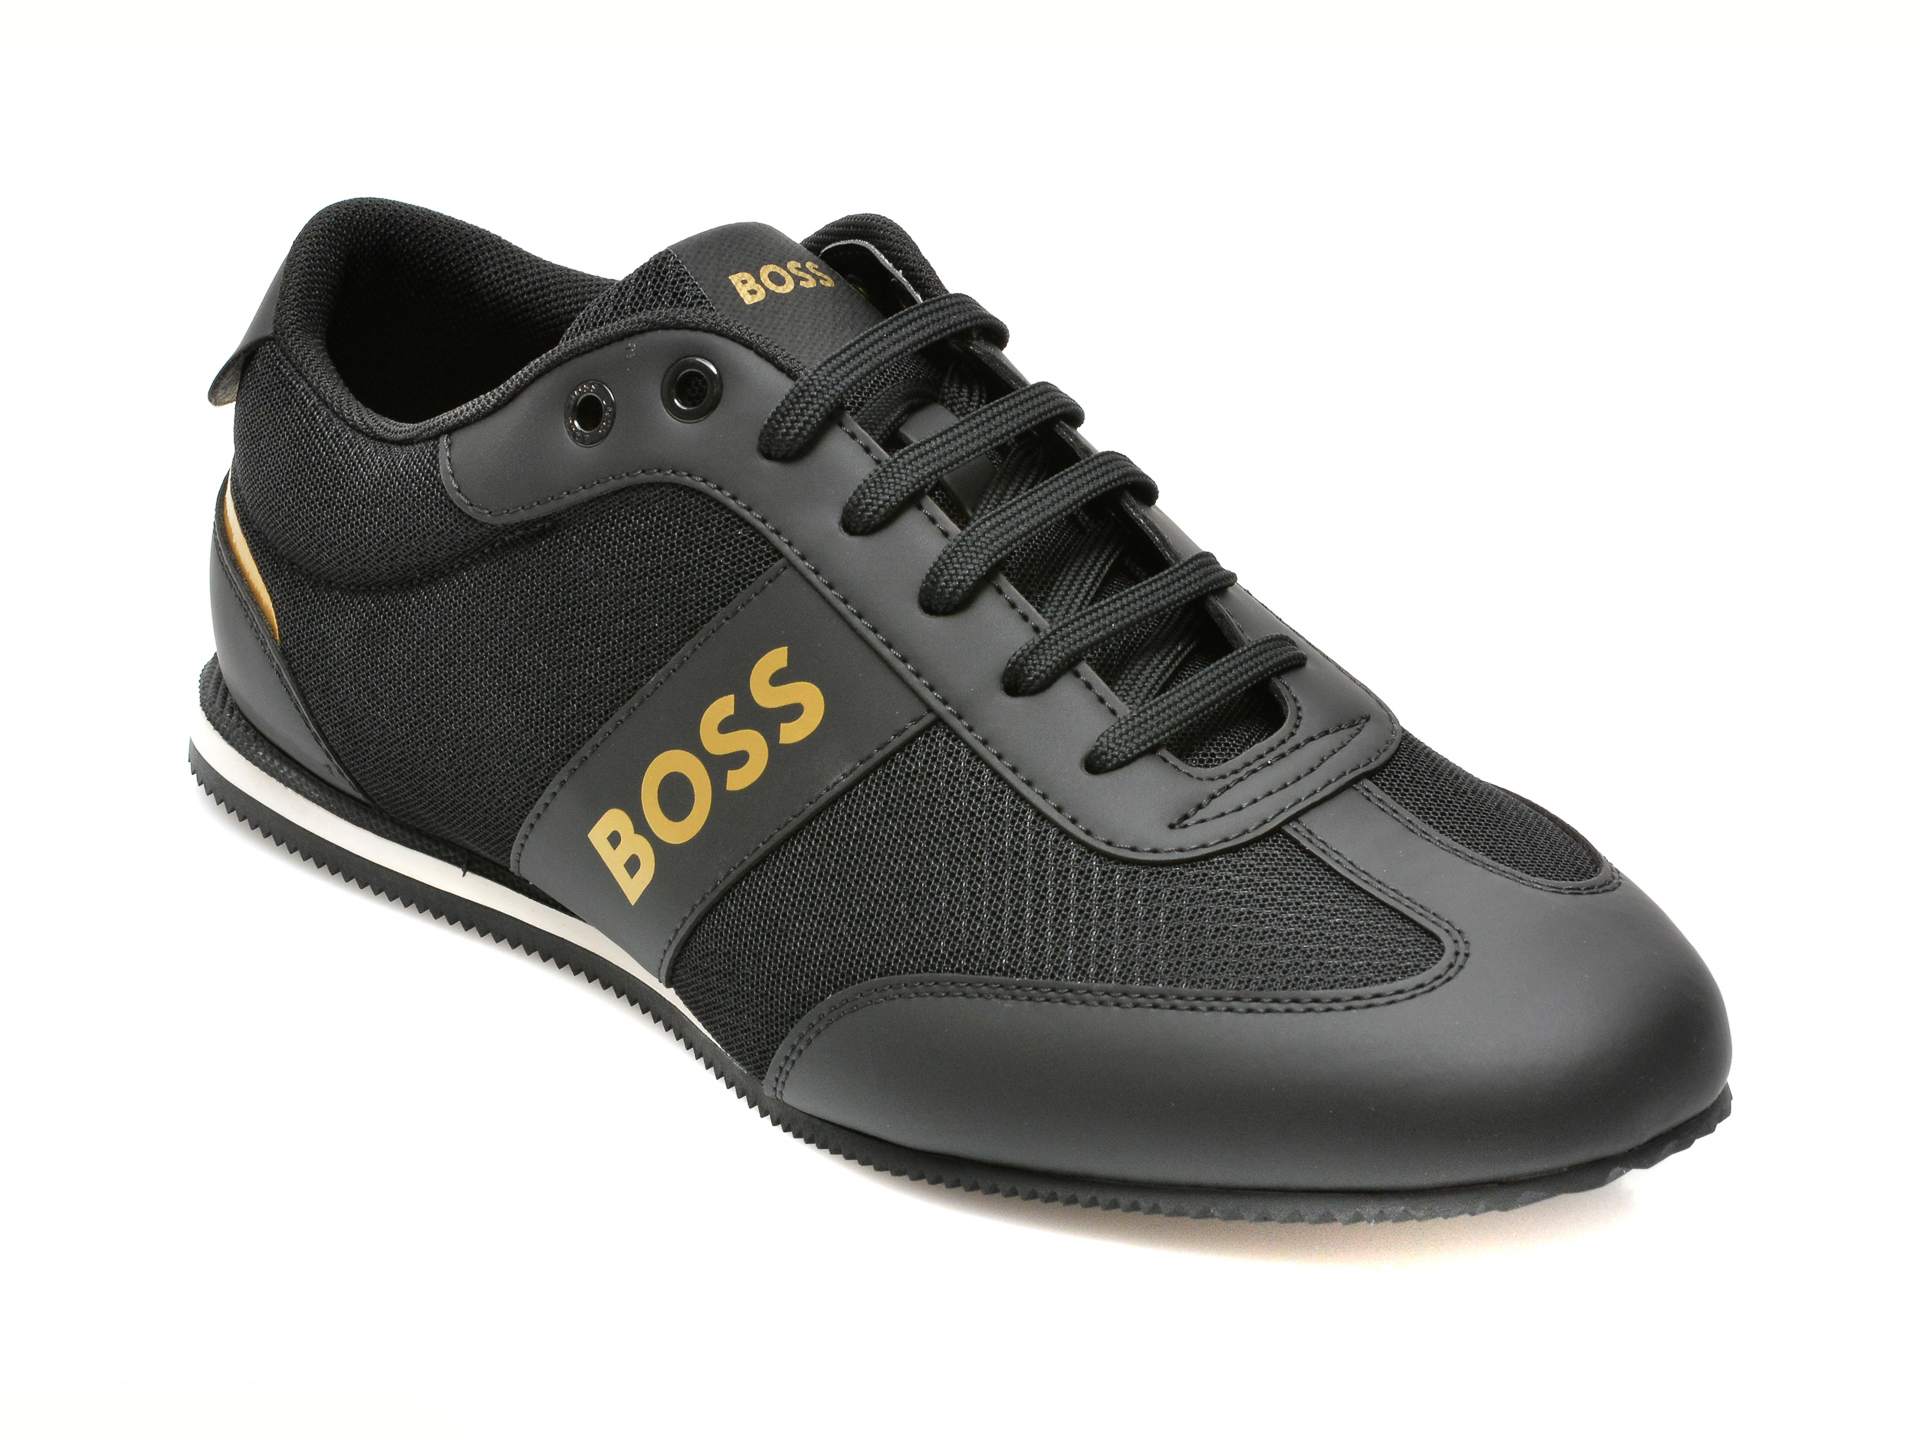 Pantofi sport HUGO BOSS negri, 180, din material textil si piele ecologica Hugo Boss